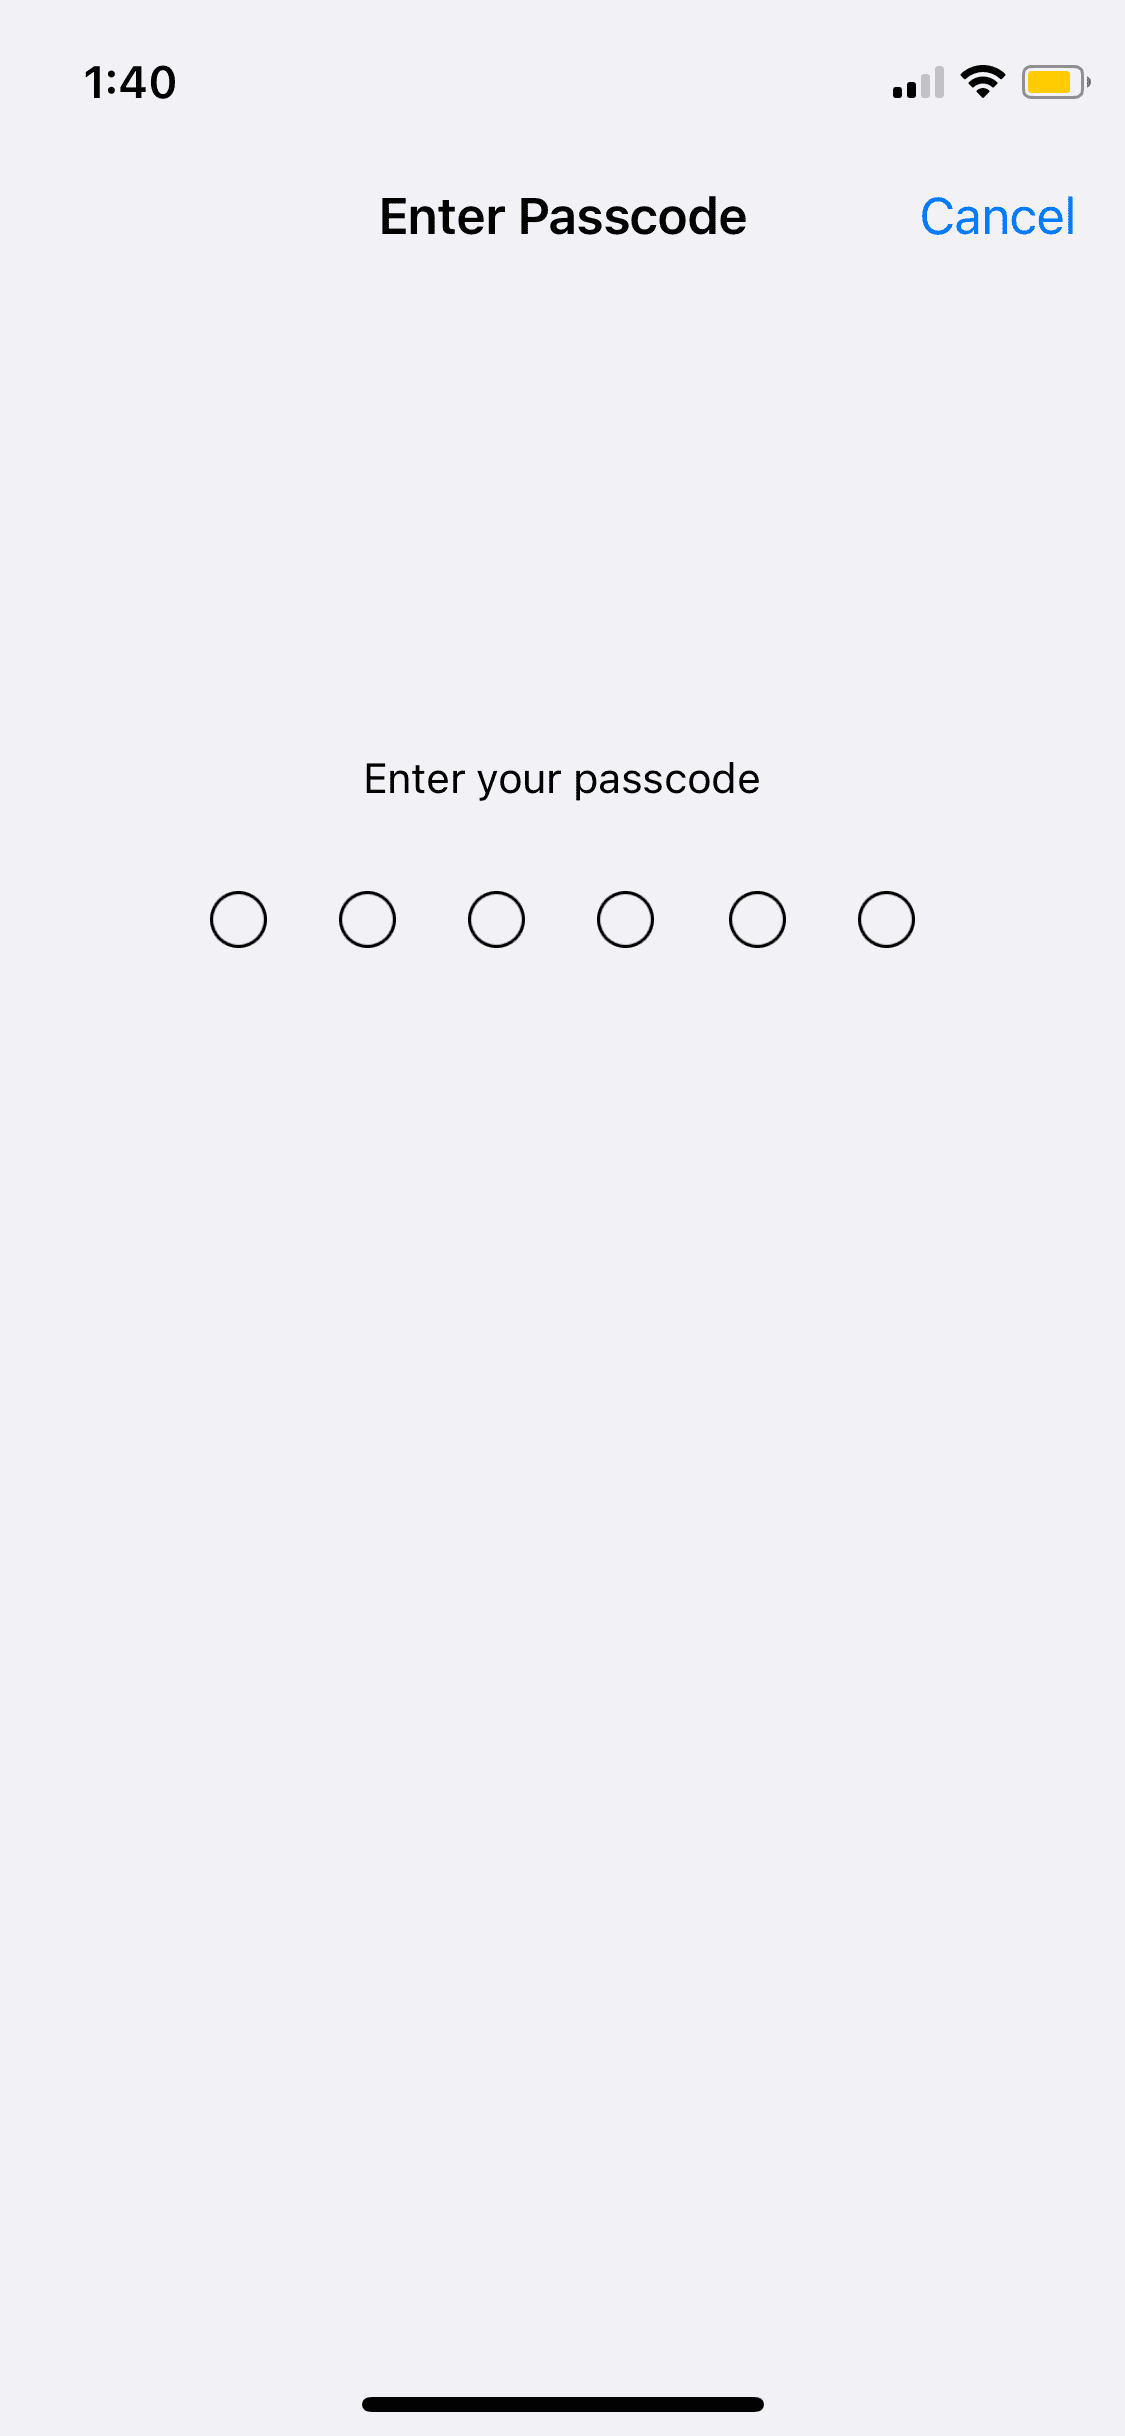 iPhone Enter your passcode screen